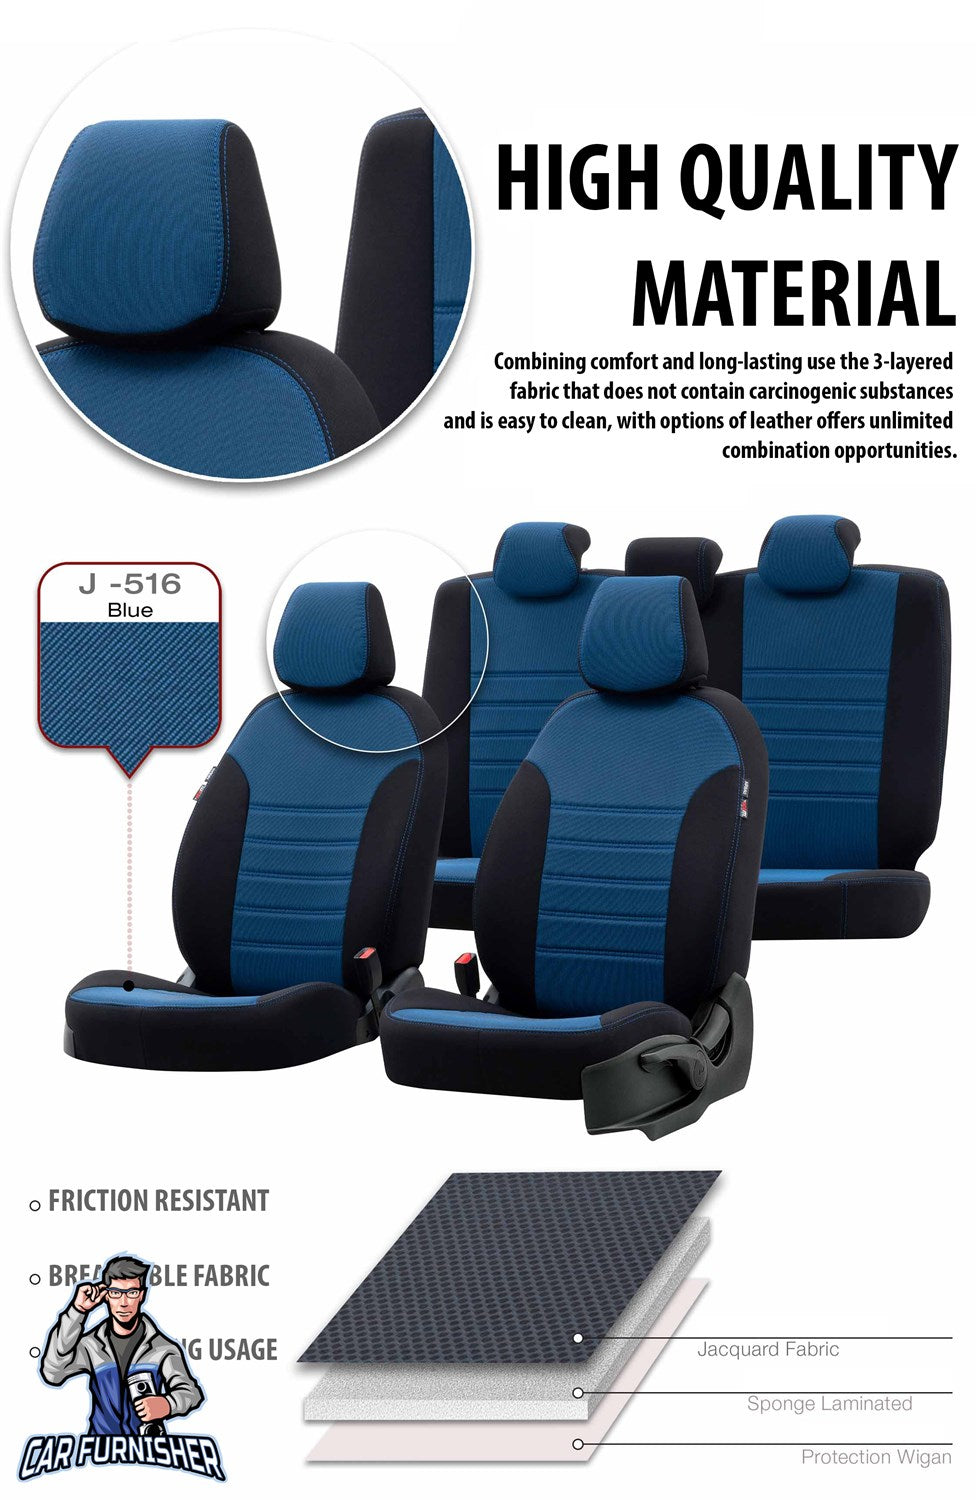 Tata Xenon Seat Covers Original Jacquard Design Red Jacquard Fabric